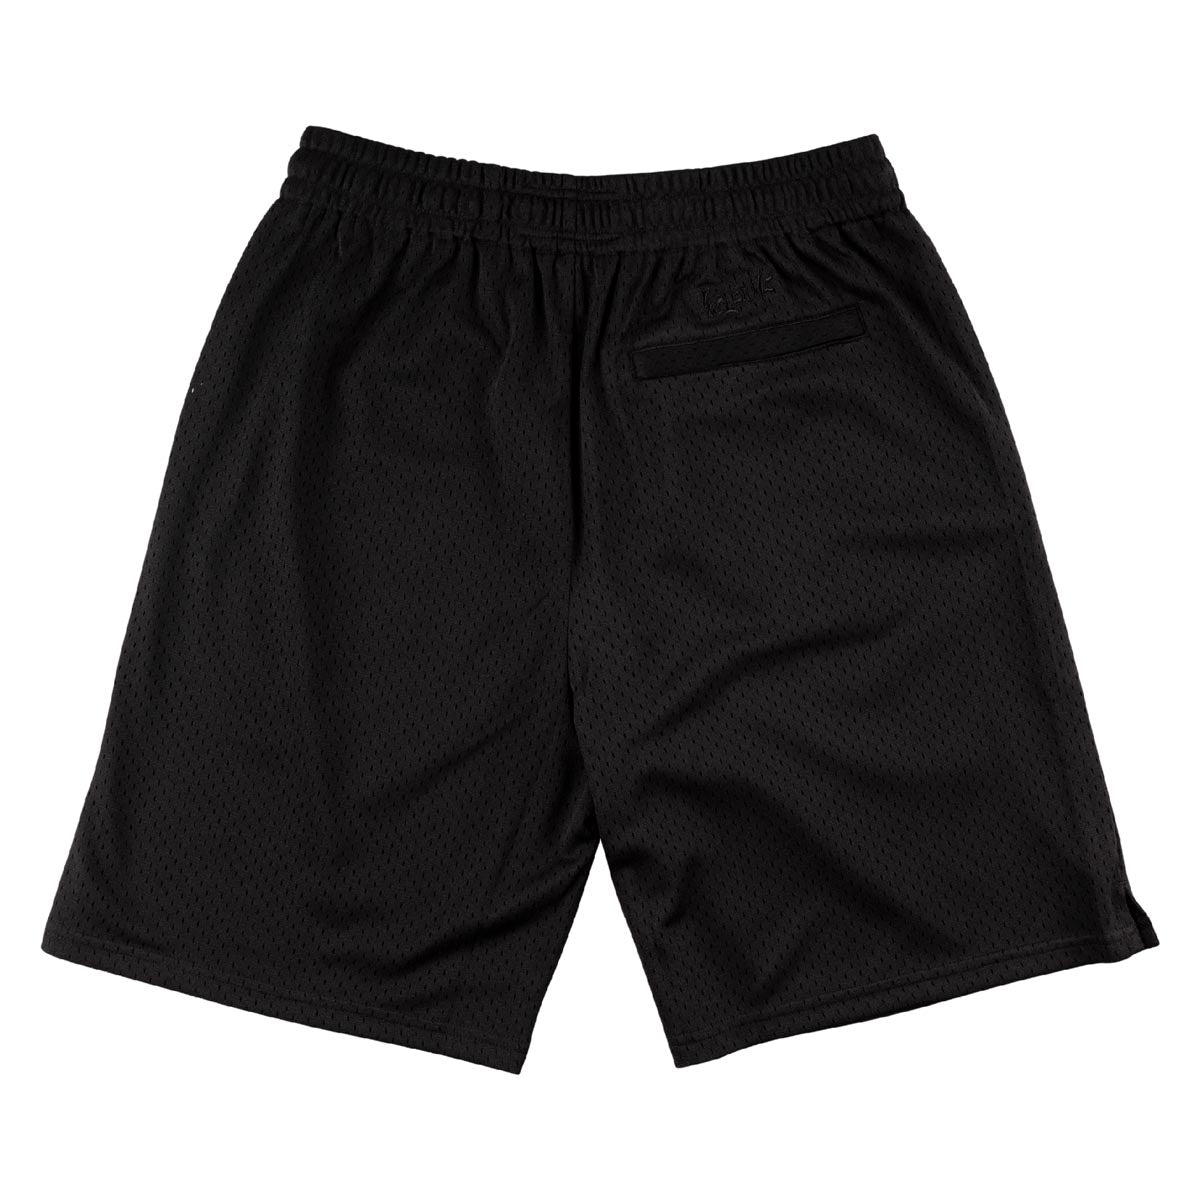 Welcome Fang Mesh Shorts - Black image 2